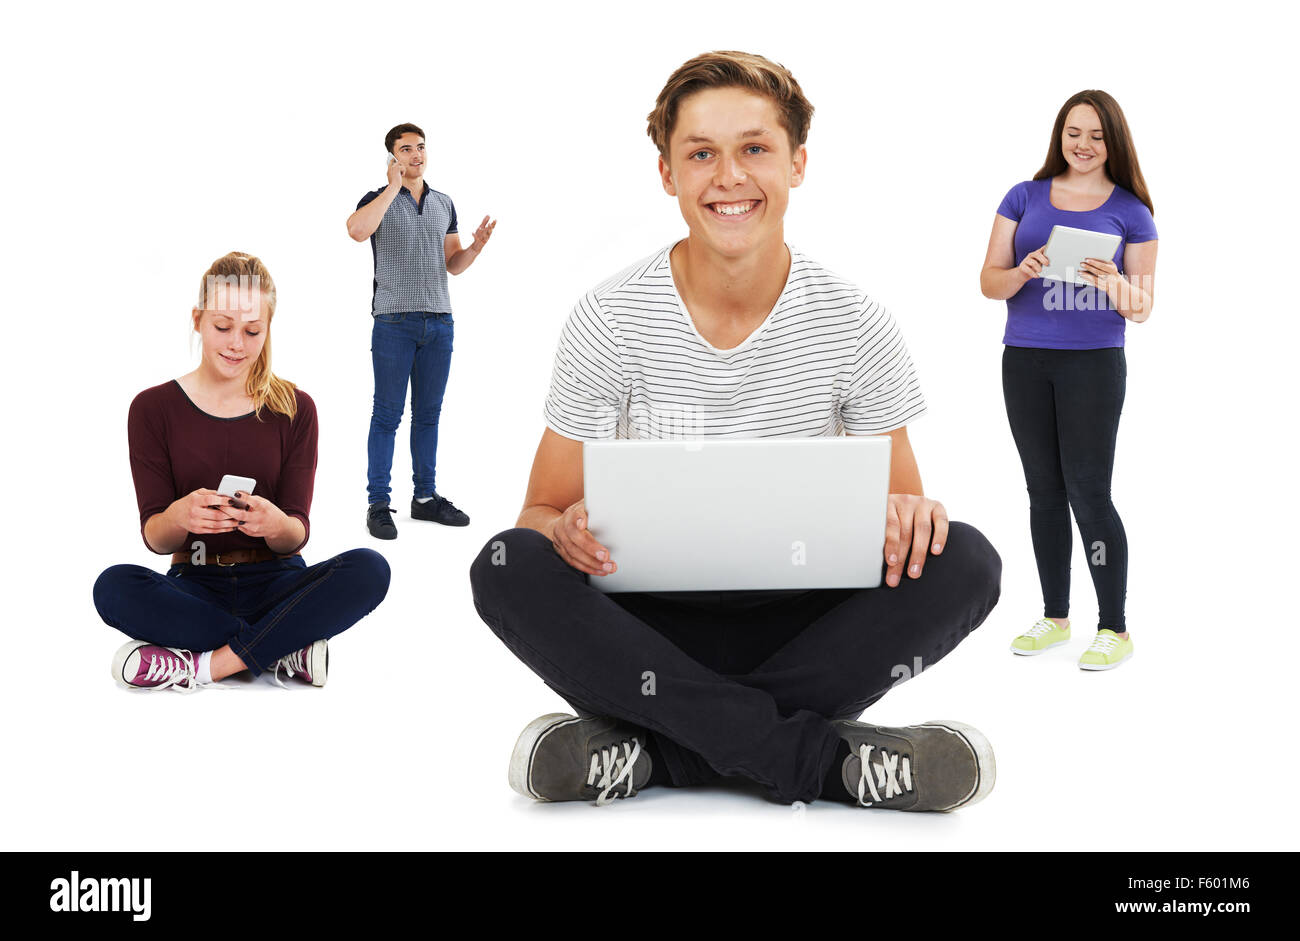 Studioaufnahme von Teenagern mit Kommunikationstechnik Stockfoto